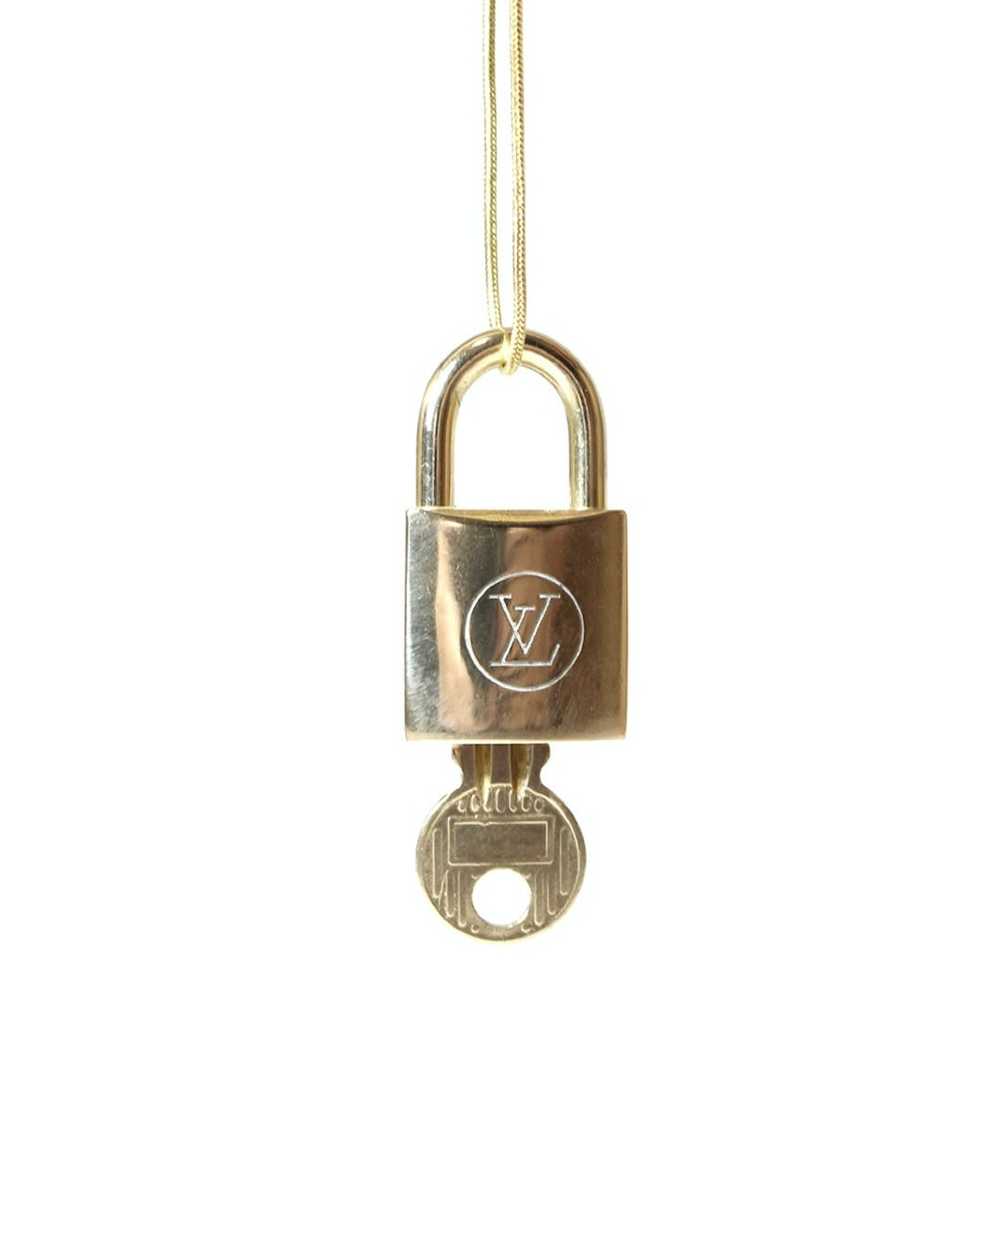 Louis Vuitton Padlock with Key No. 310 - I Love Handbags